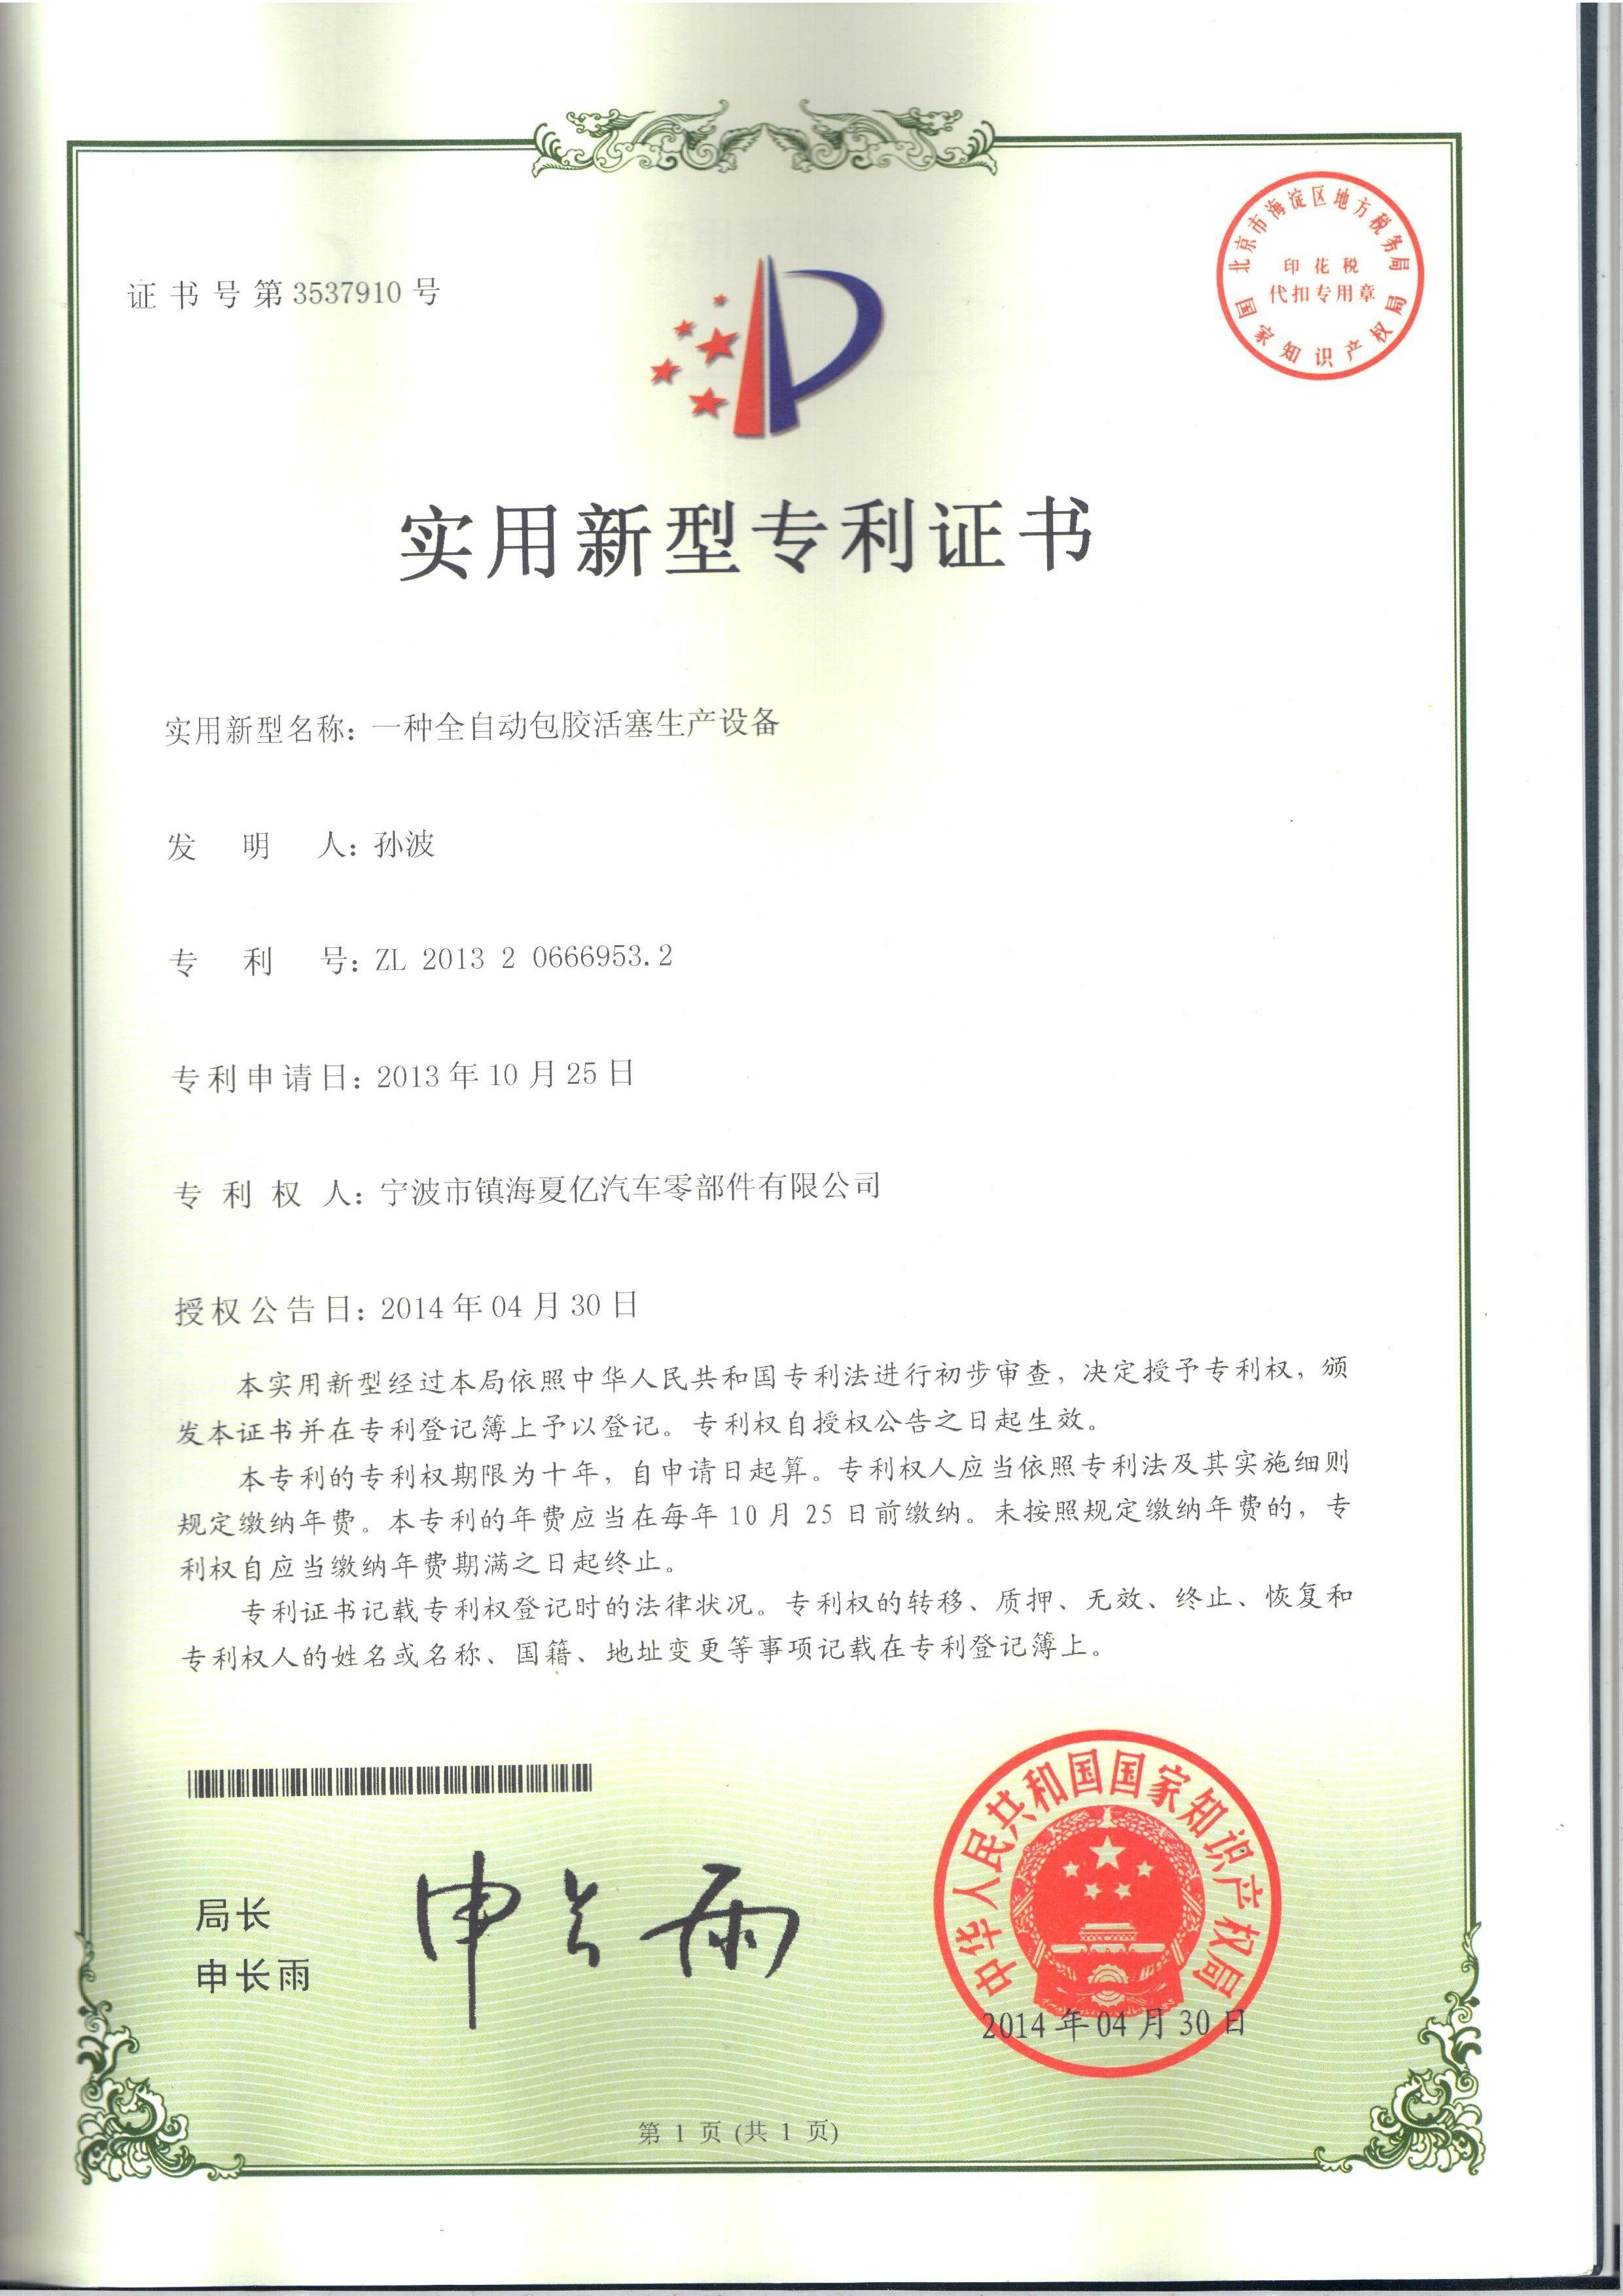 Porcelana Ningbo XiaYi Electromechanical Technology Co.,Ltd. Certificaciones